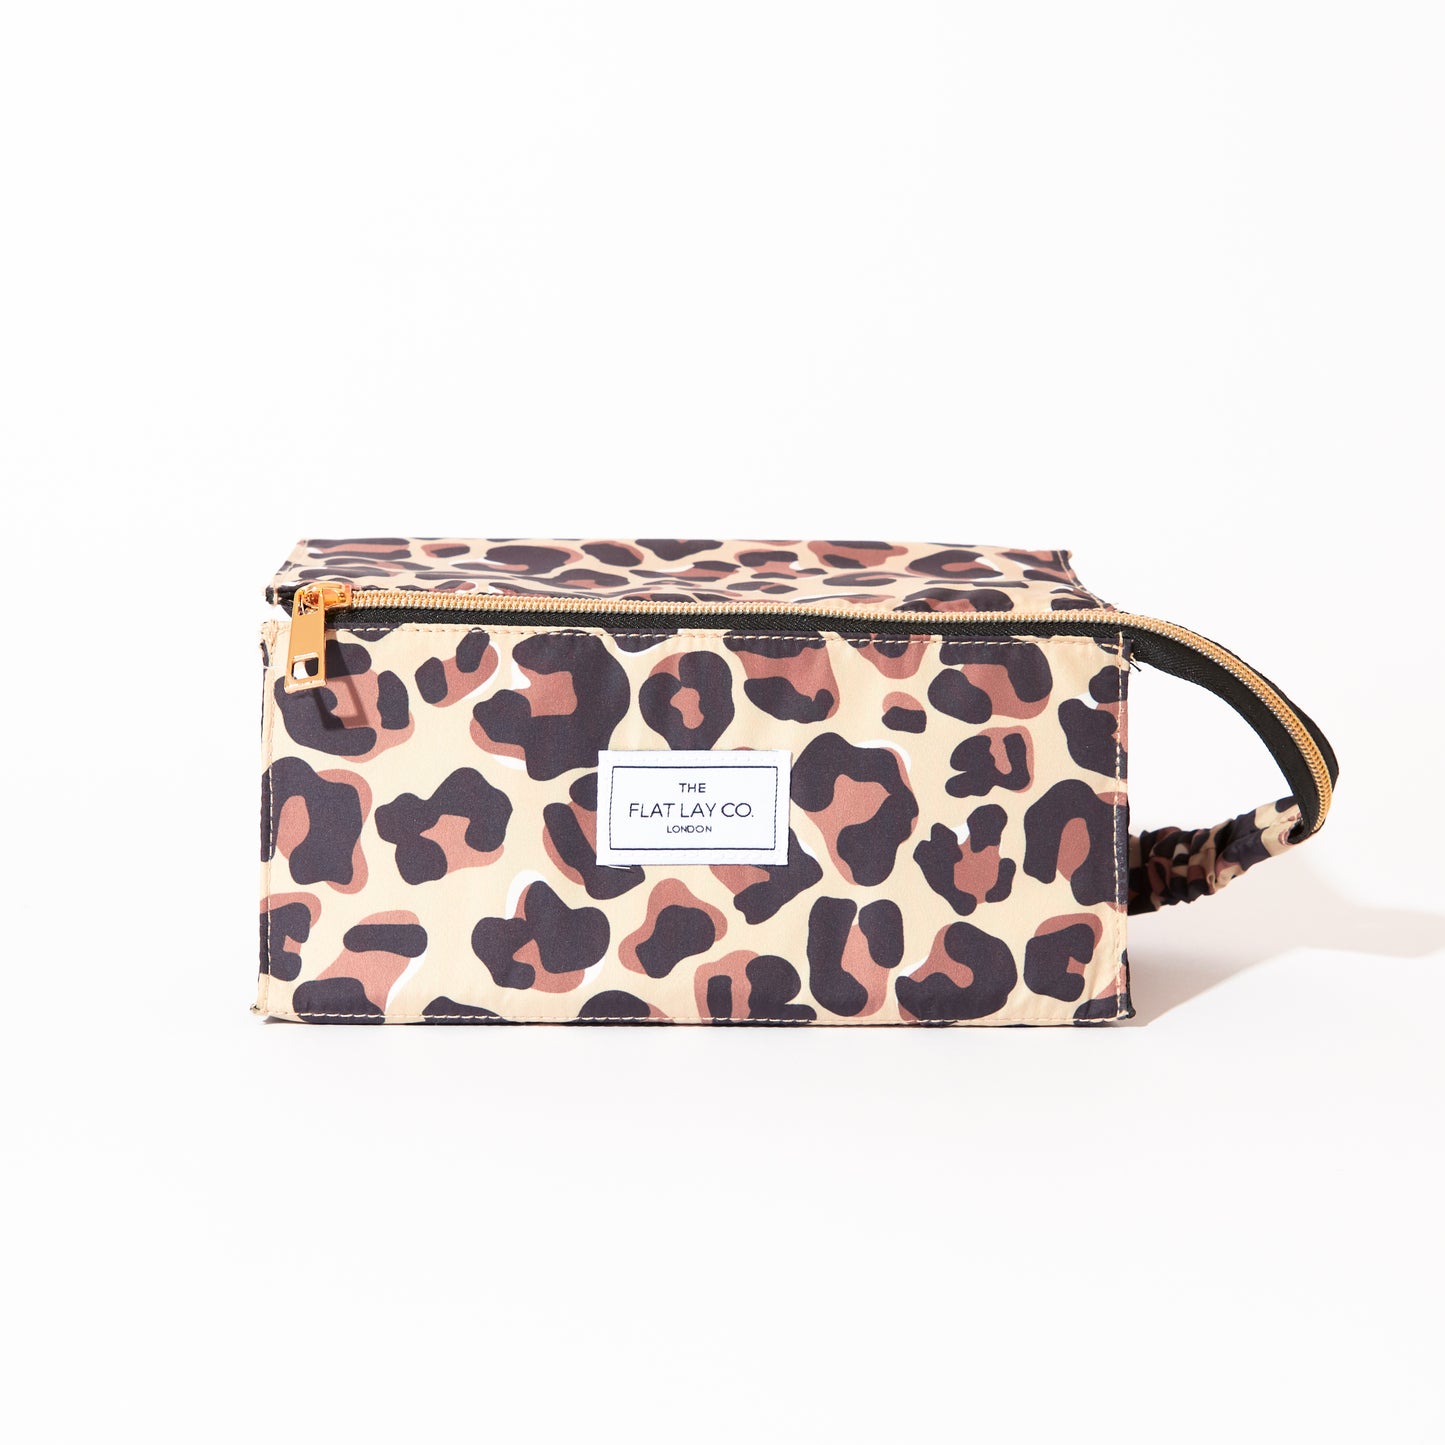 Leopard Print Open Flat Makeup Box Bag and Tray